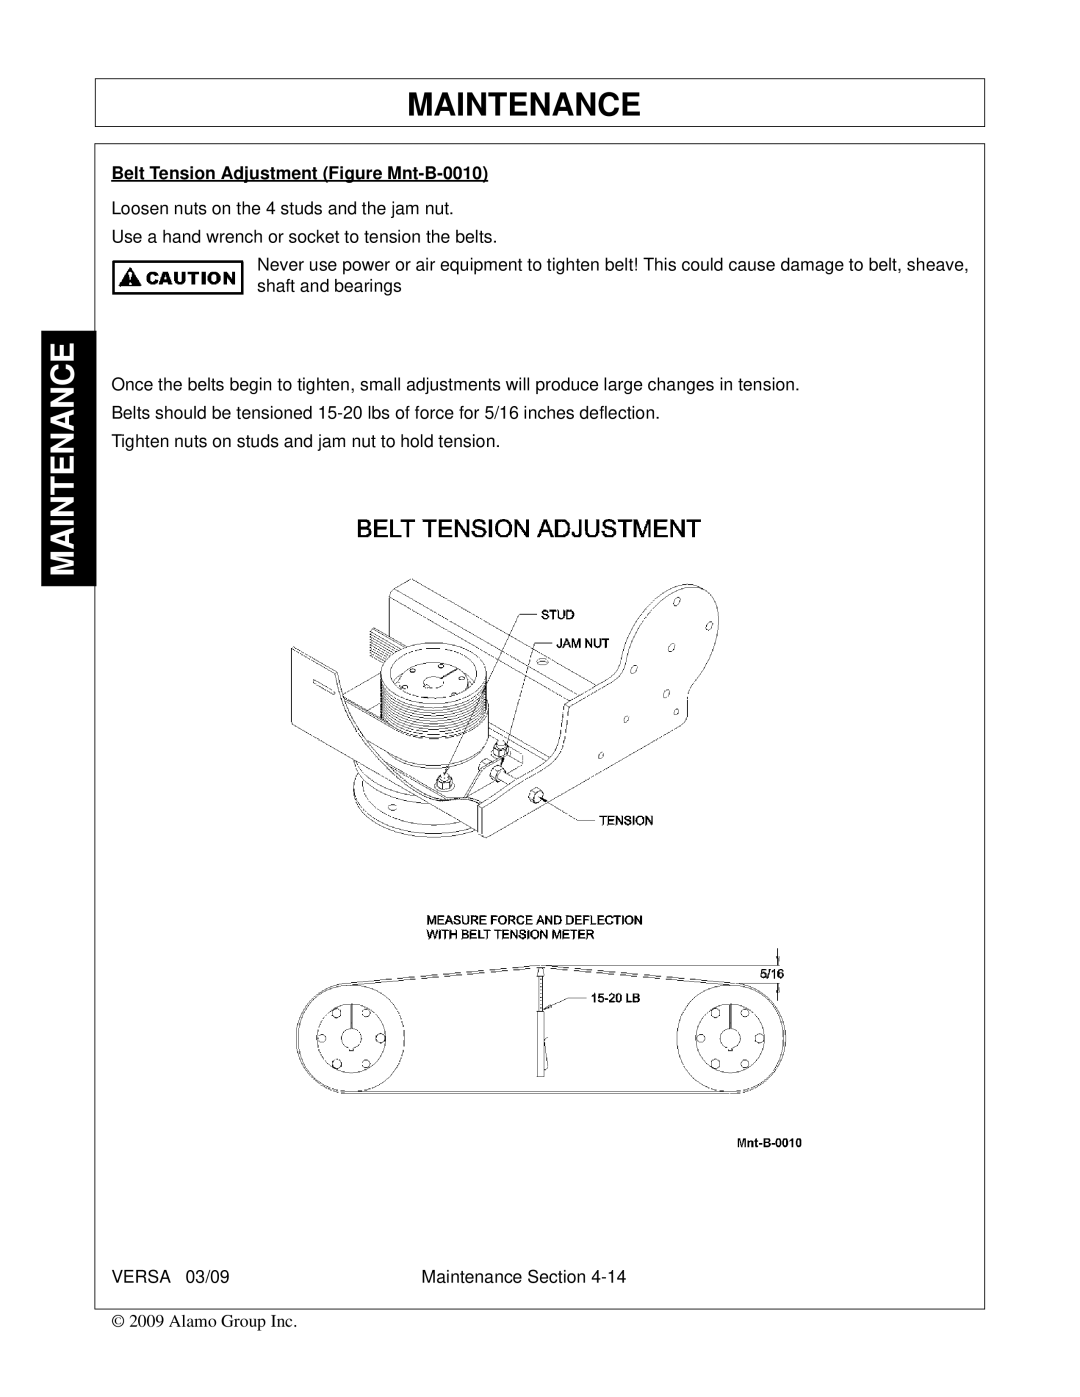 Alamo Versa Series manual Belt Tension Adjustment Figure Mnt-B-0010 